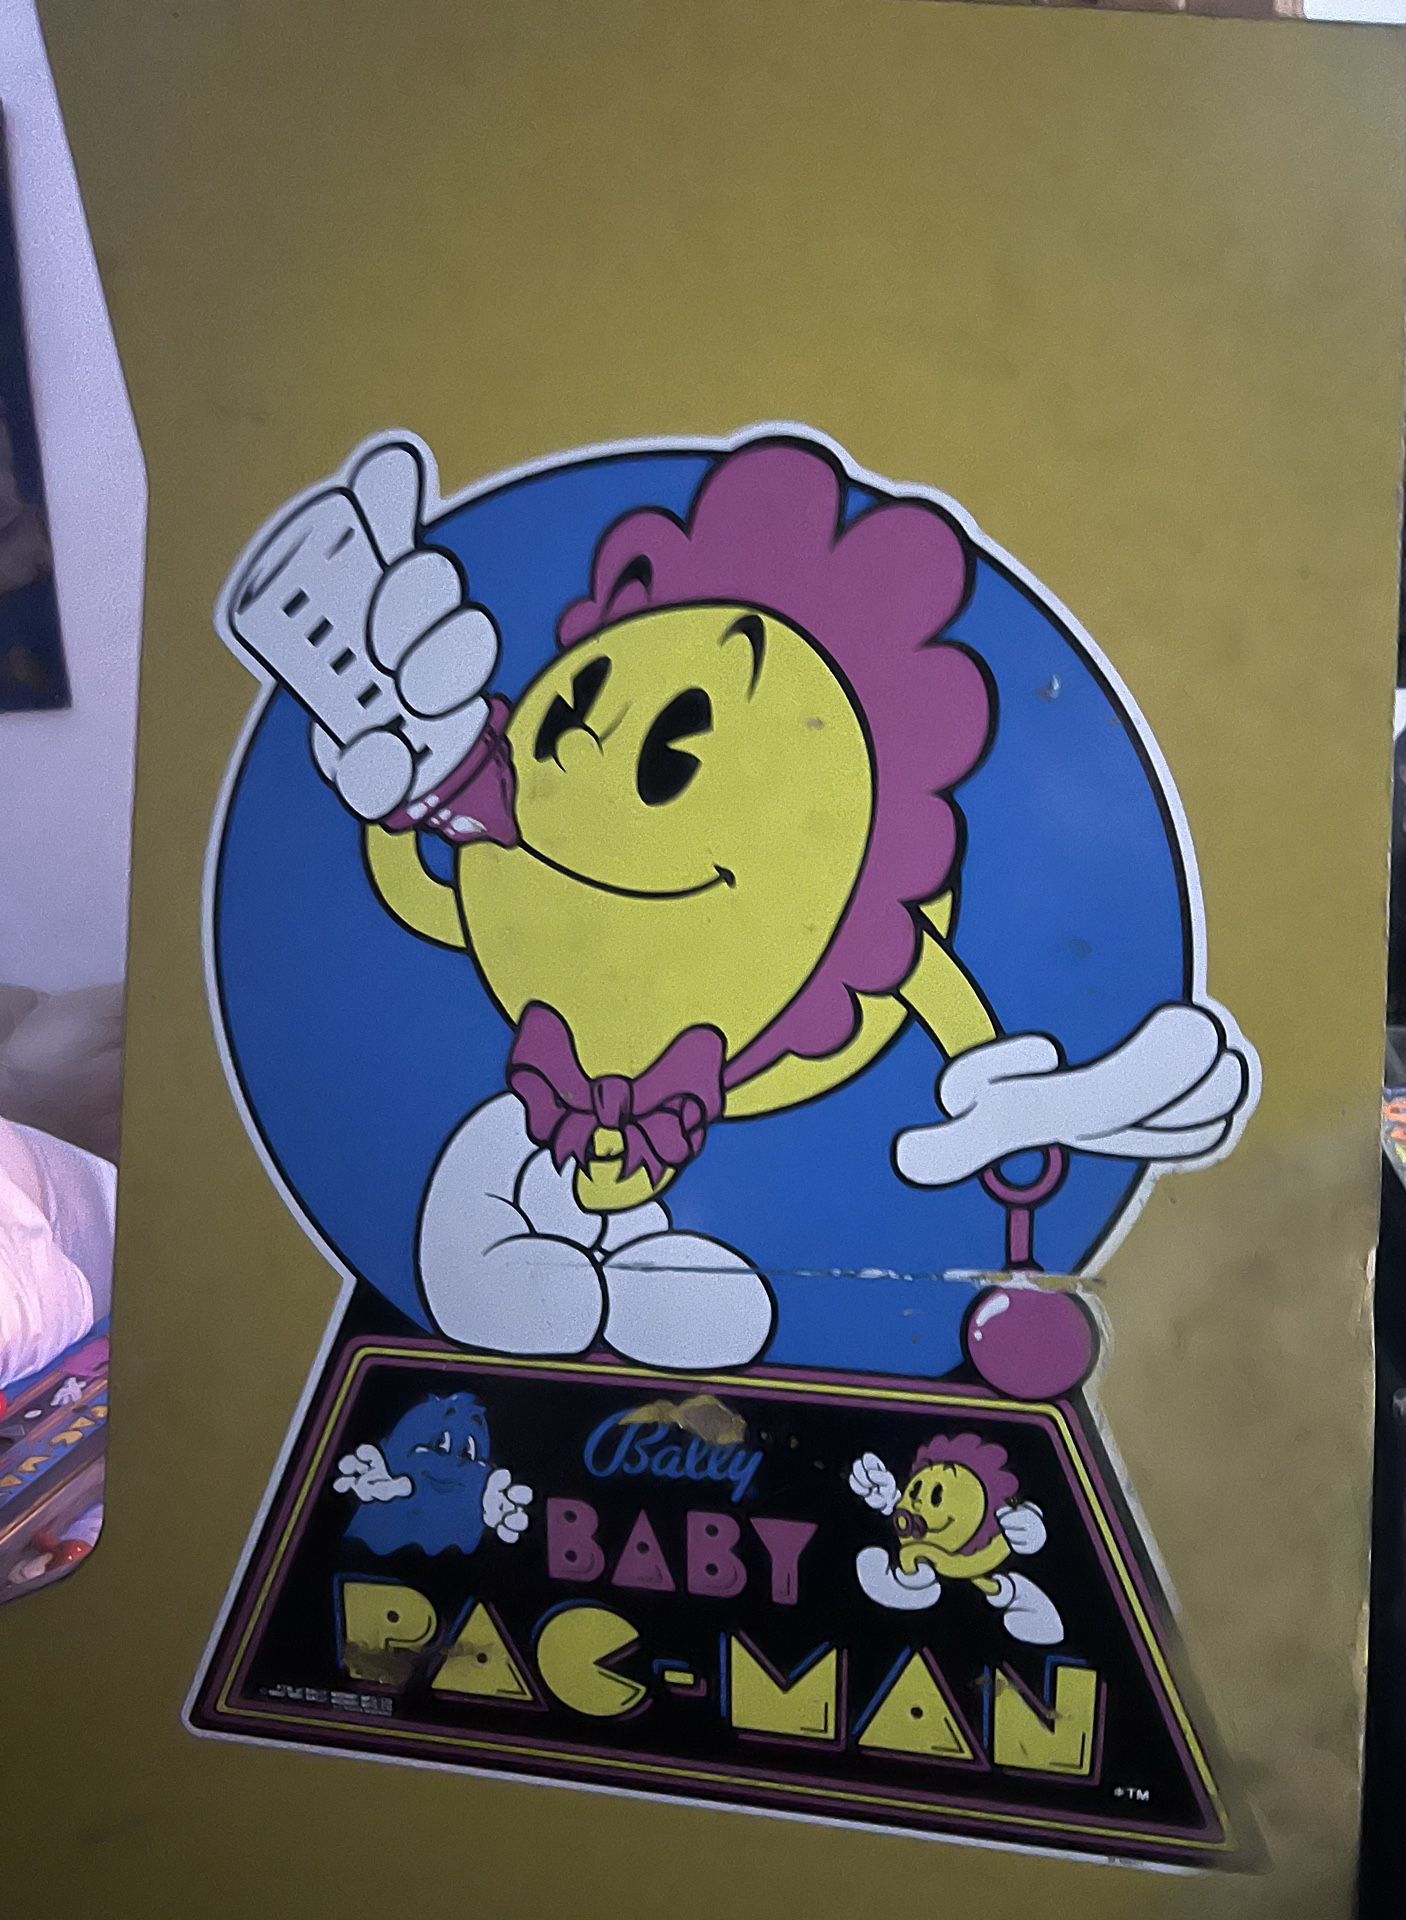 Bally Baby Pac-Man Arcade